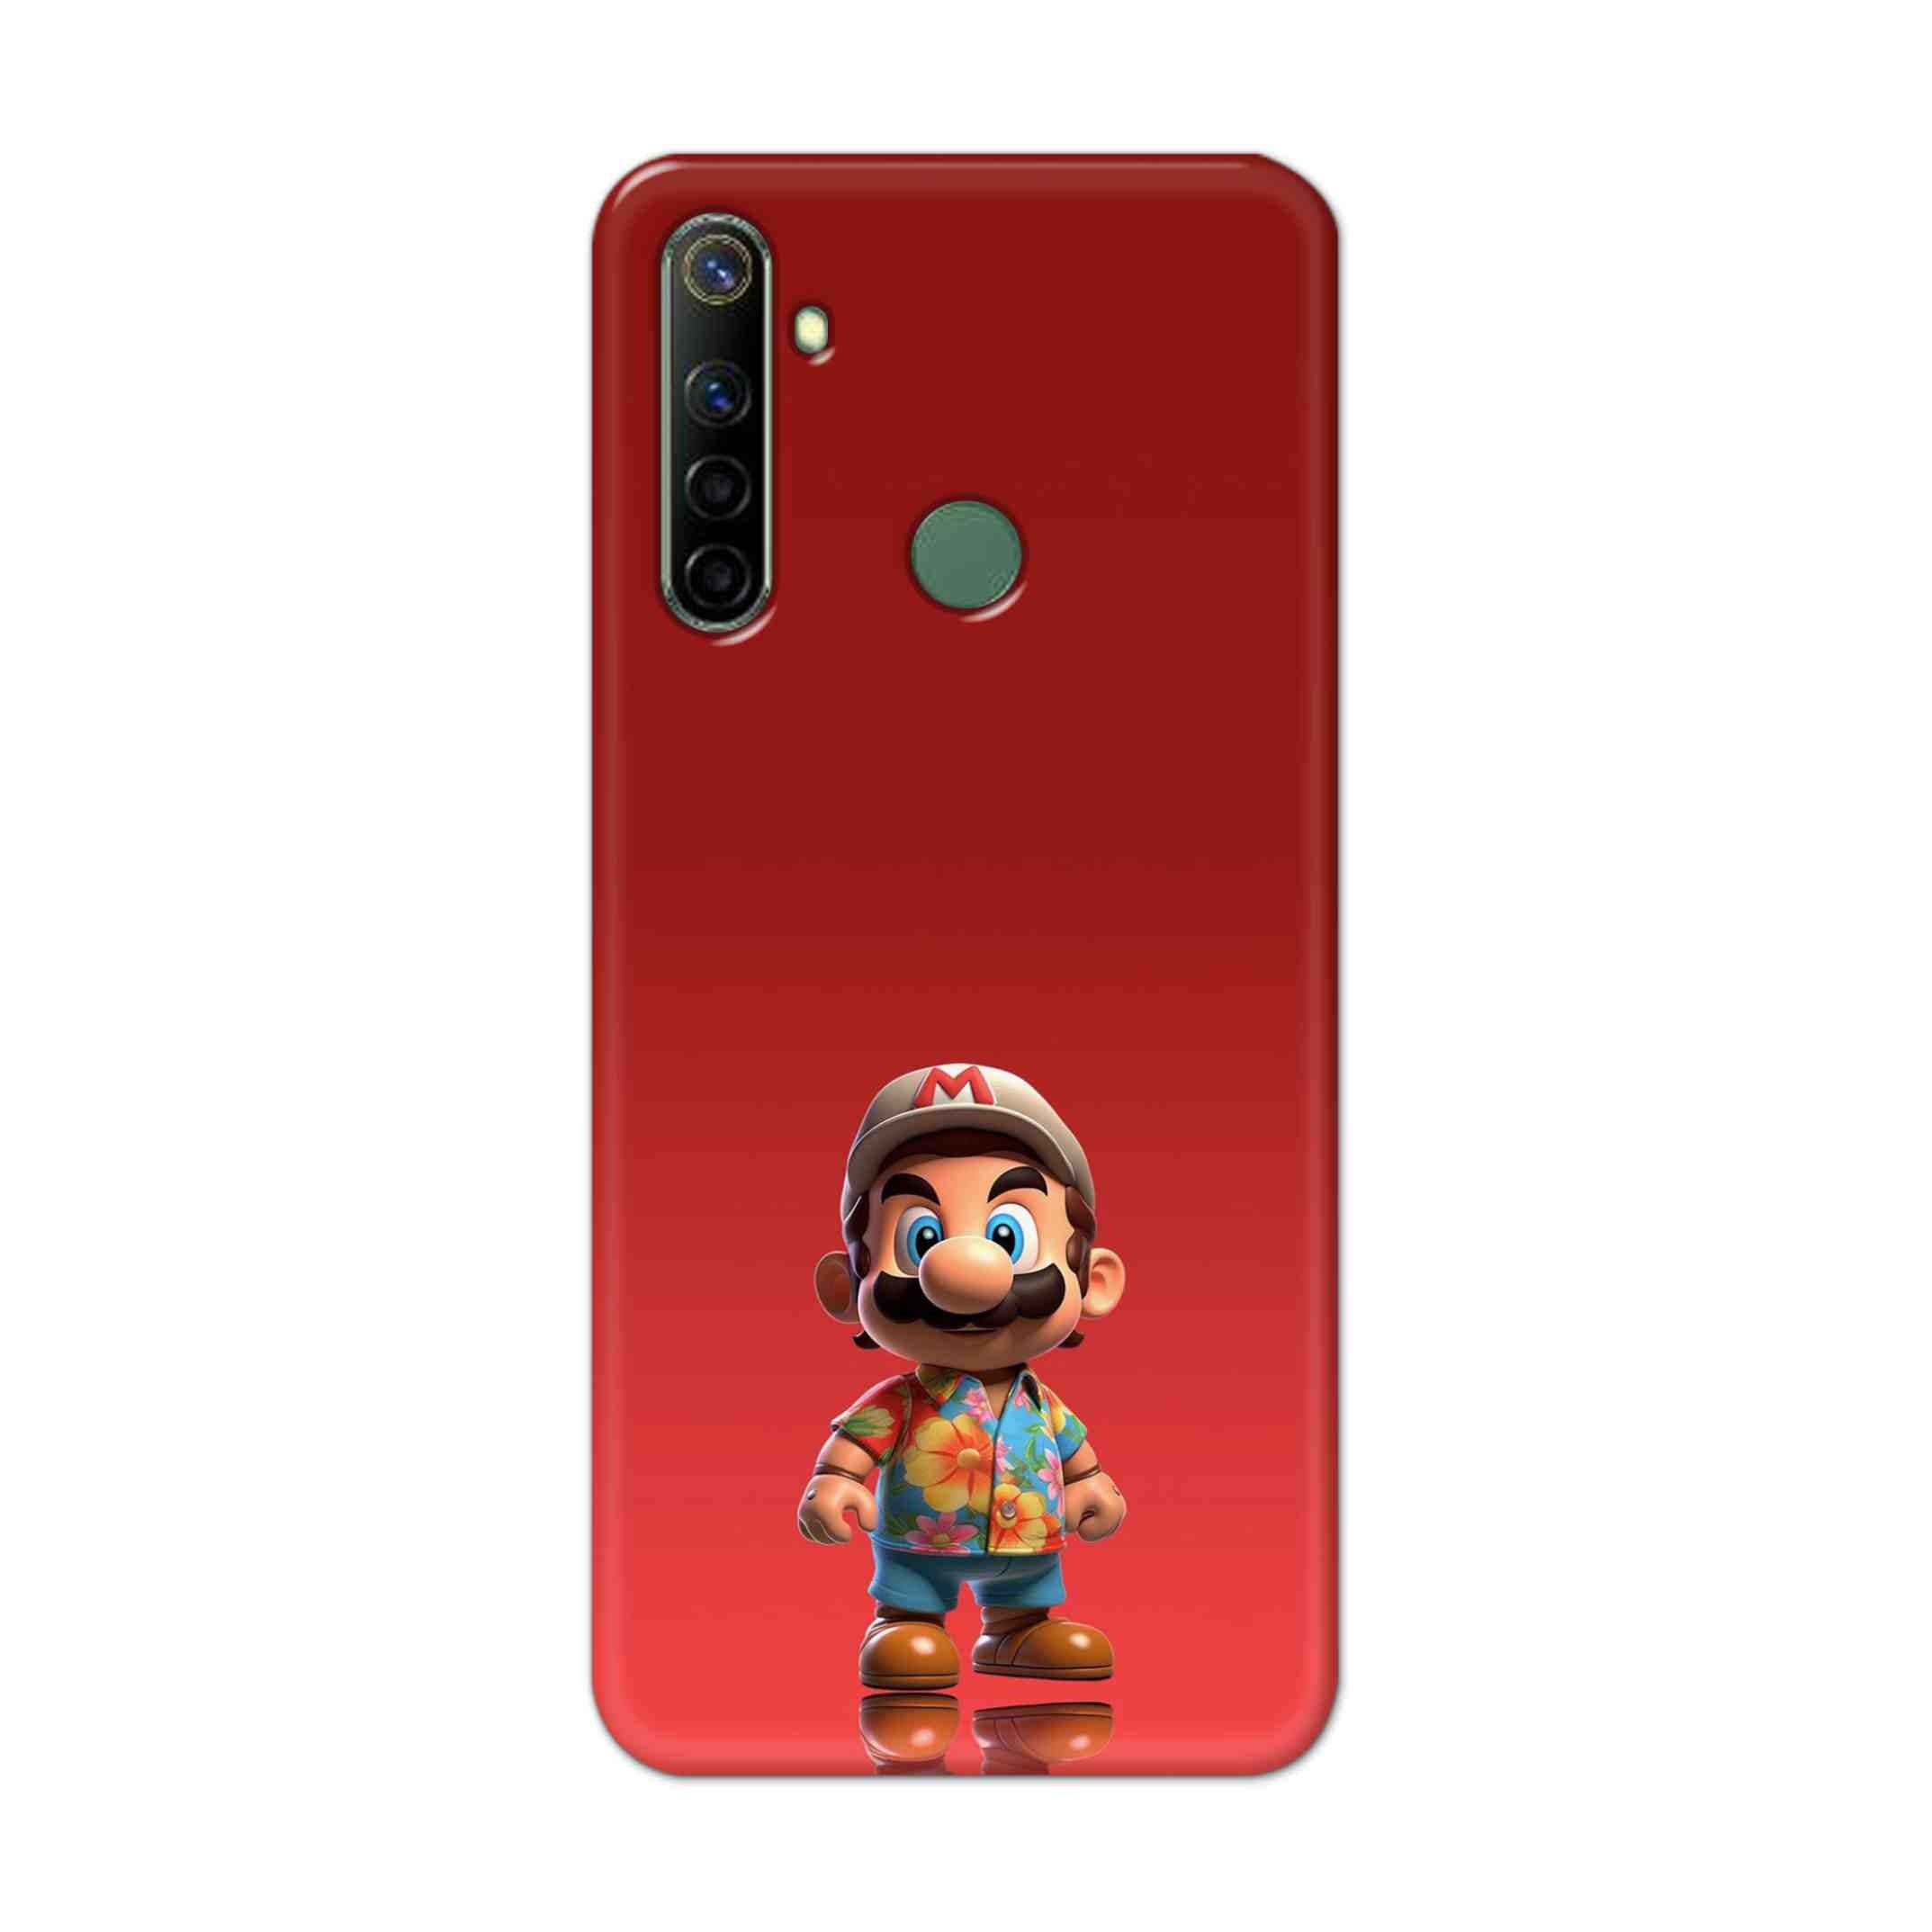 Buy Mario Hard Back Mobile Phone Case Cover For Realme Narzo 10a Online